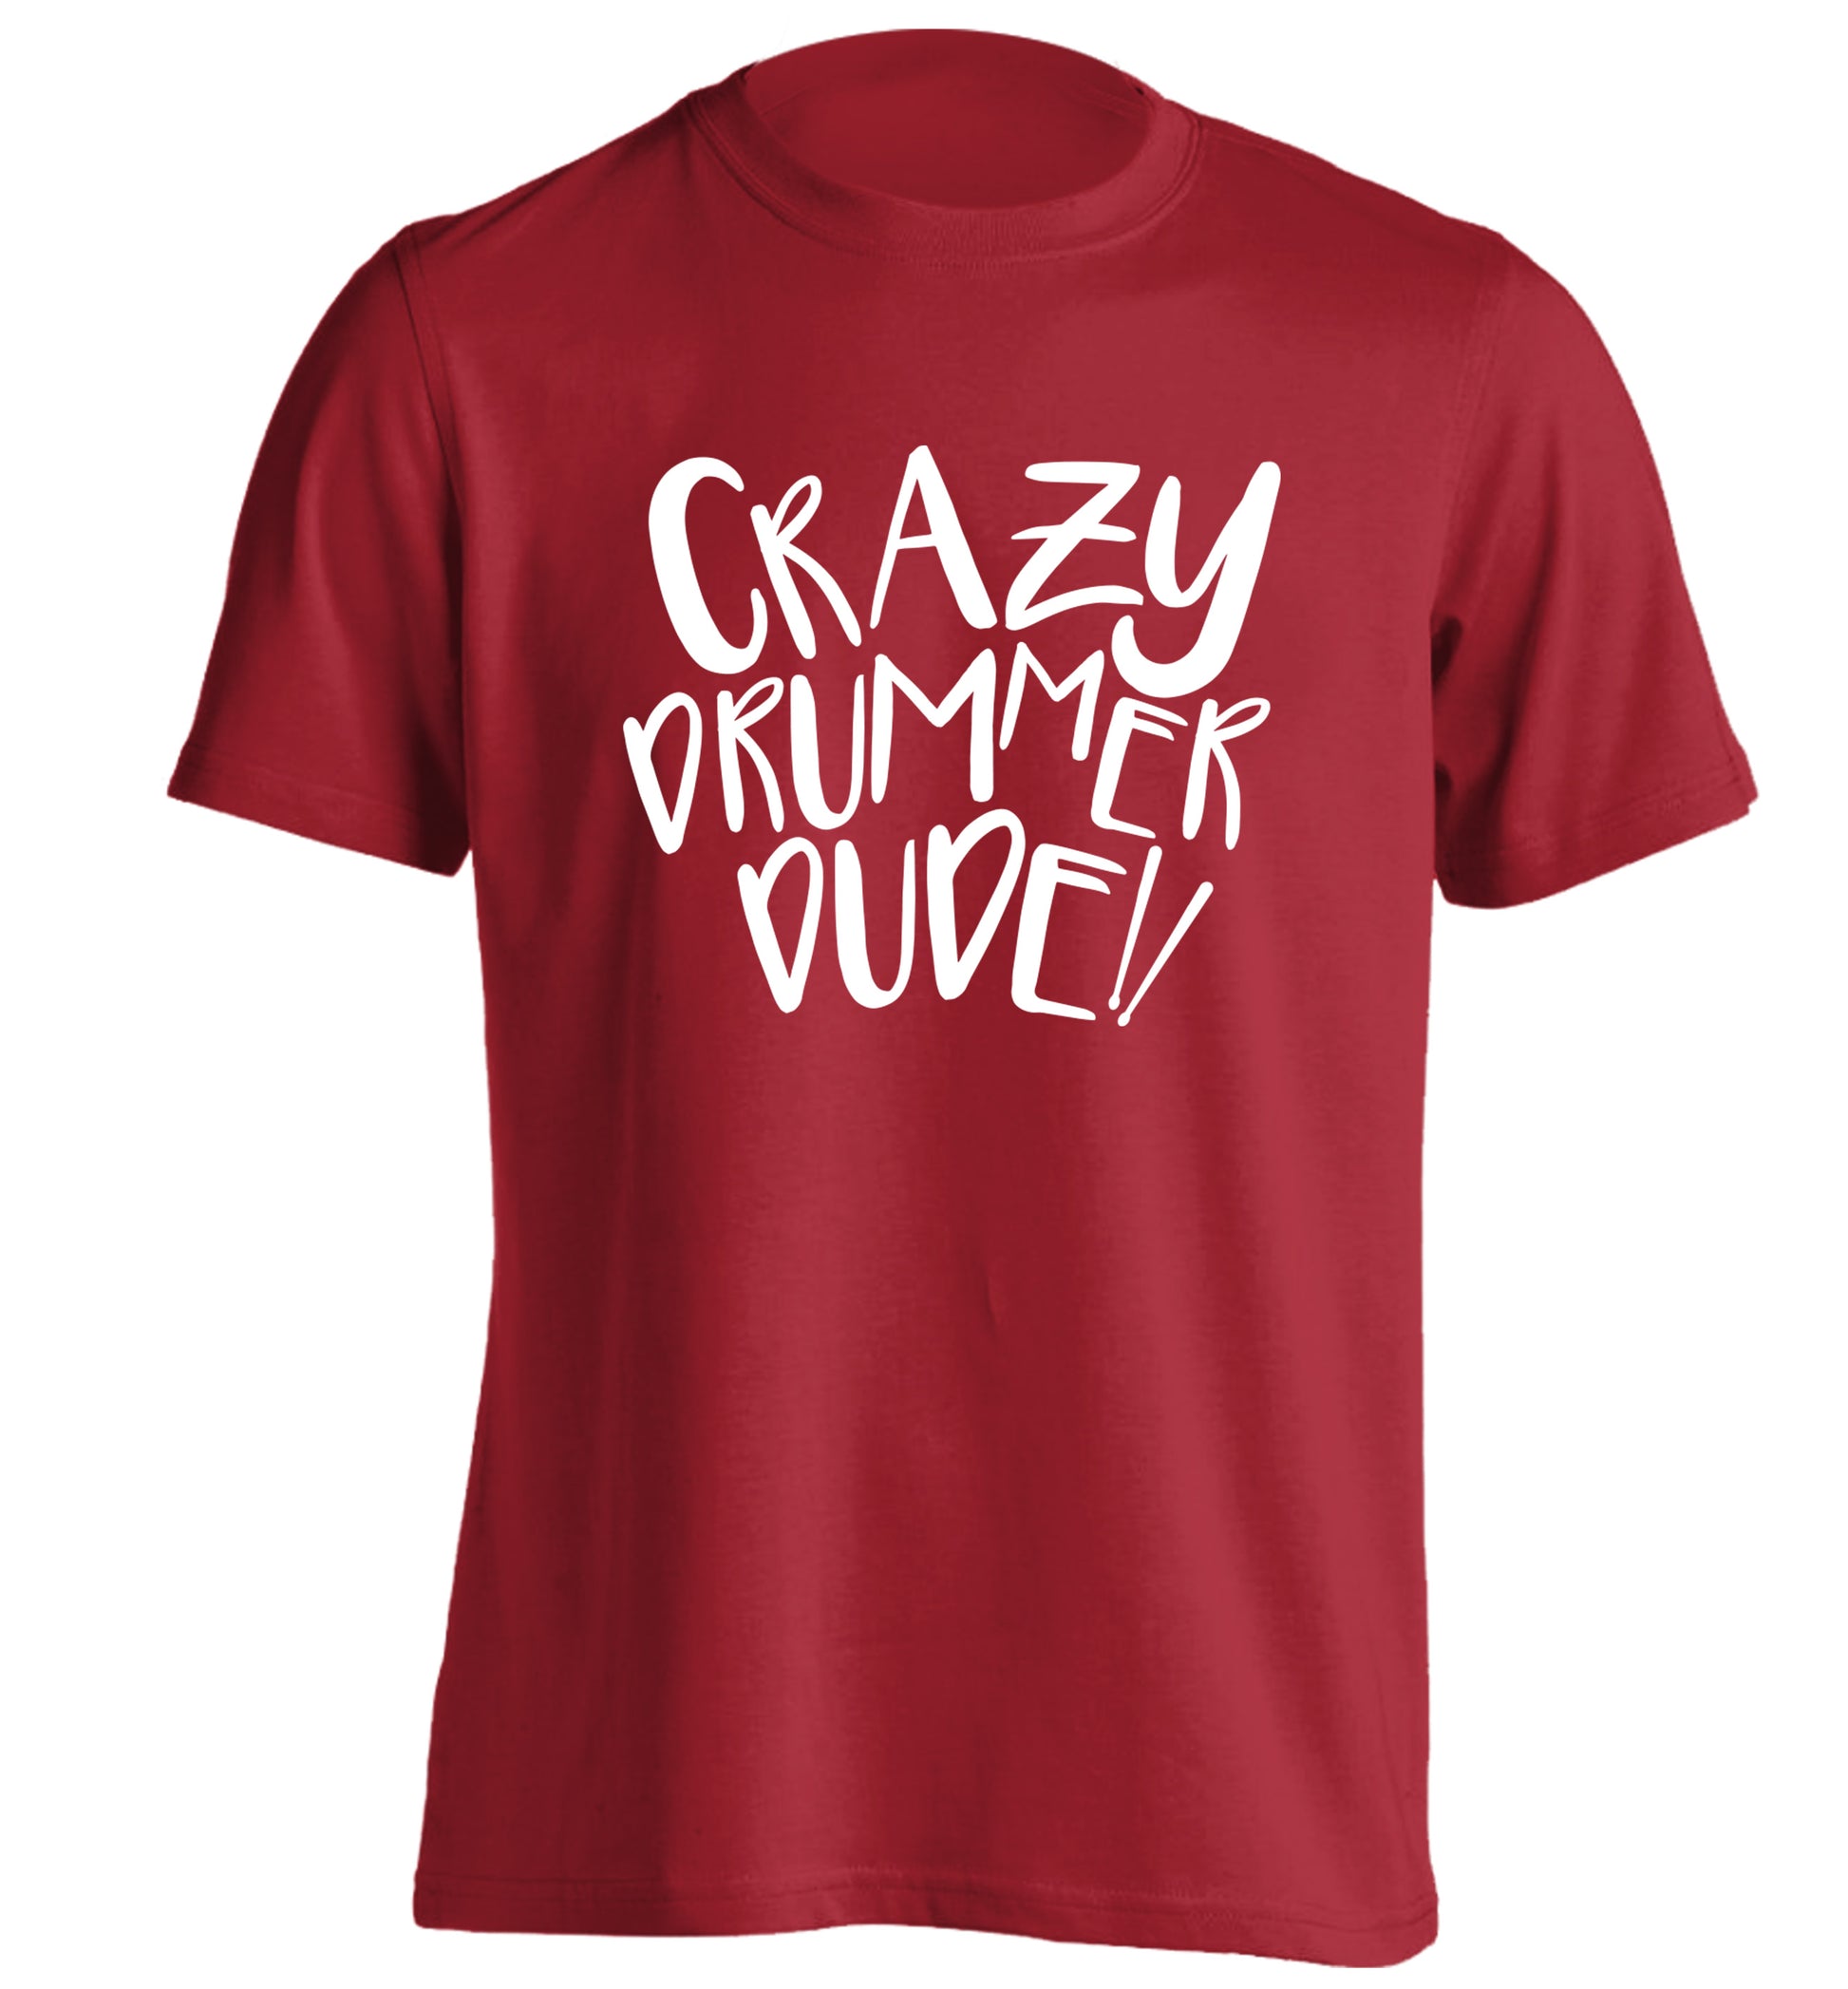 Crazy drummer dude adults unisex red Tshirt 2XL